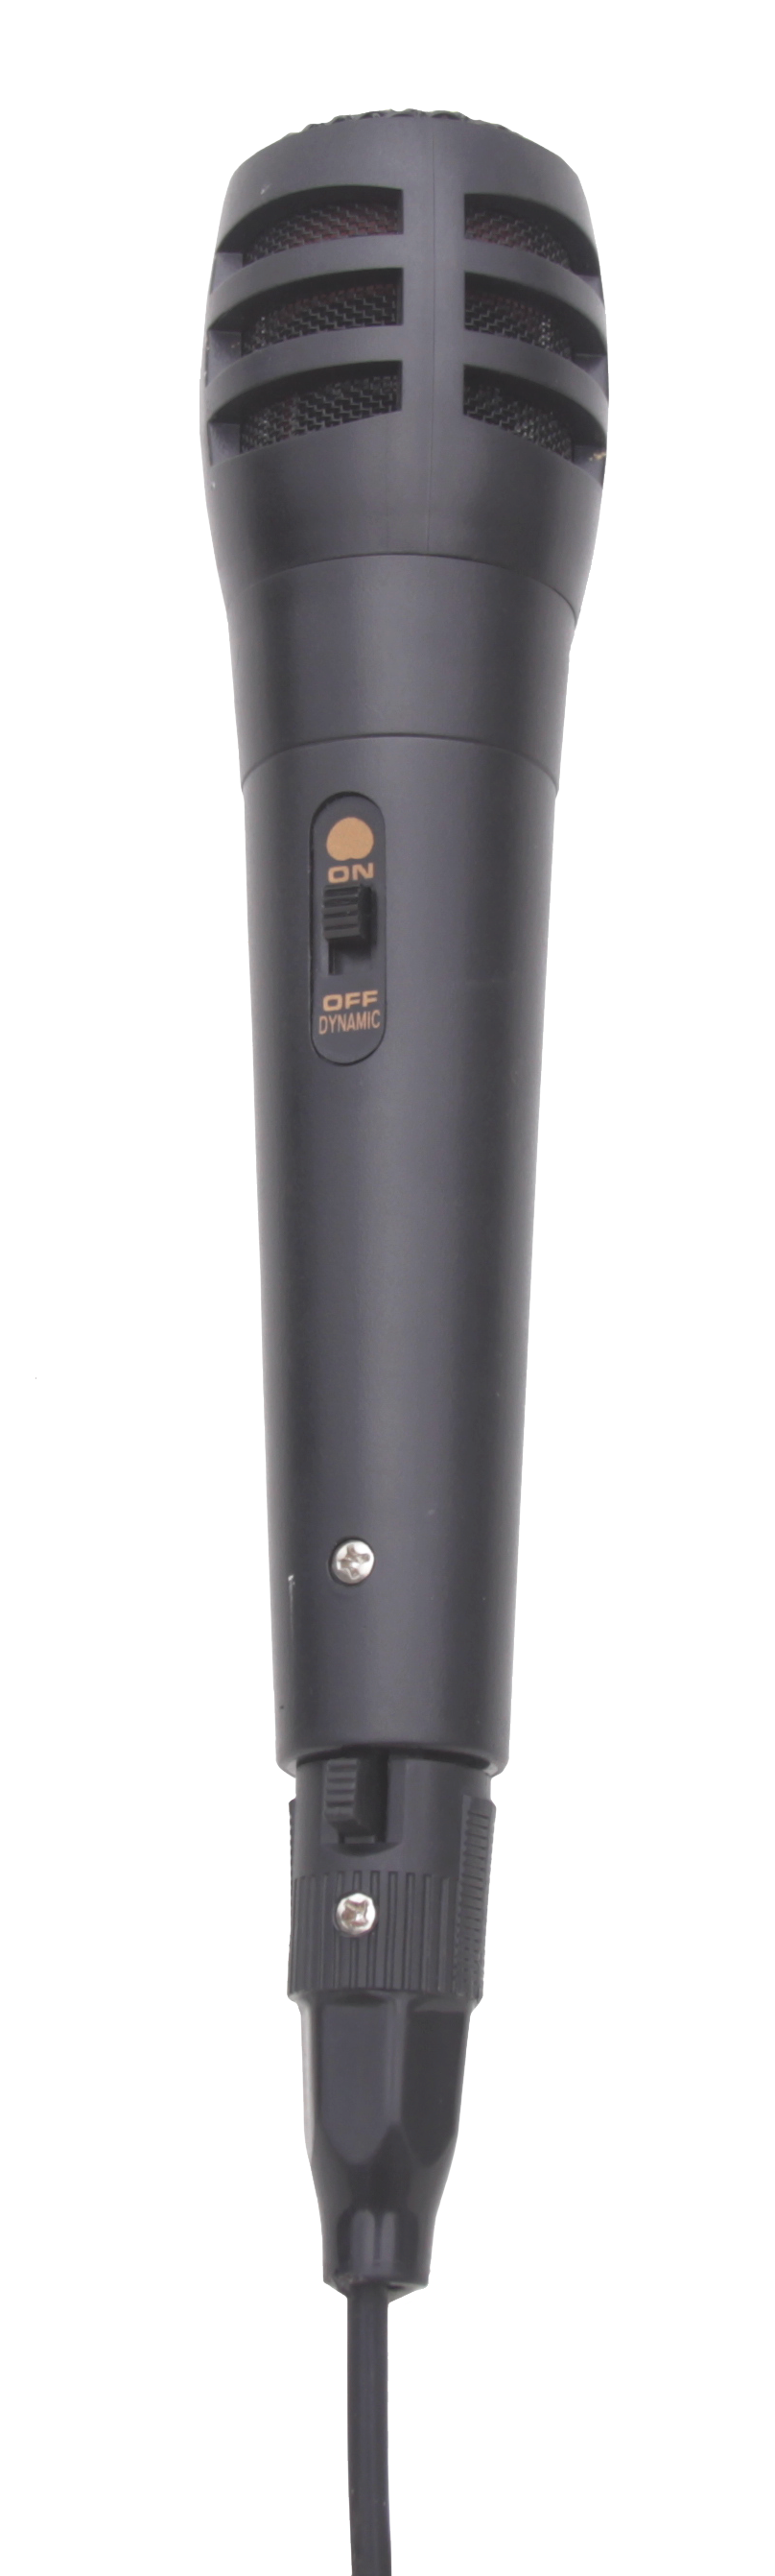 Joha Wireless Speaker (JOHA-1012) [9000 W. PMPO]